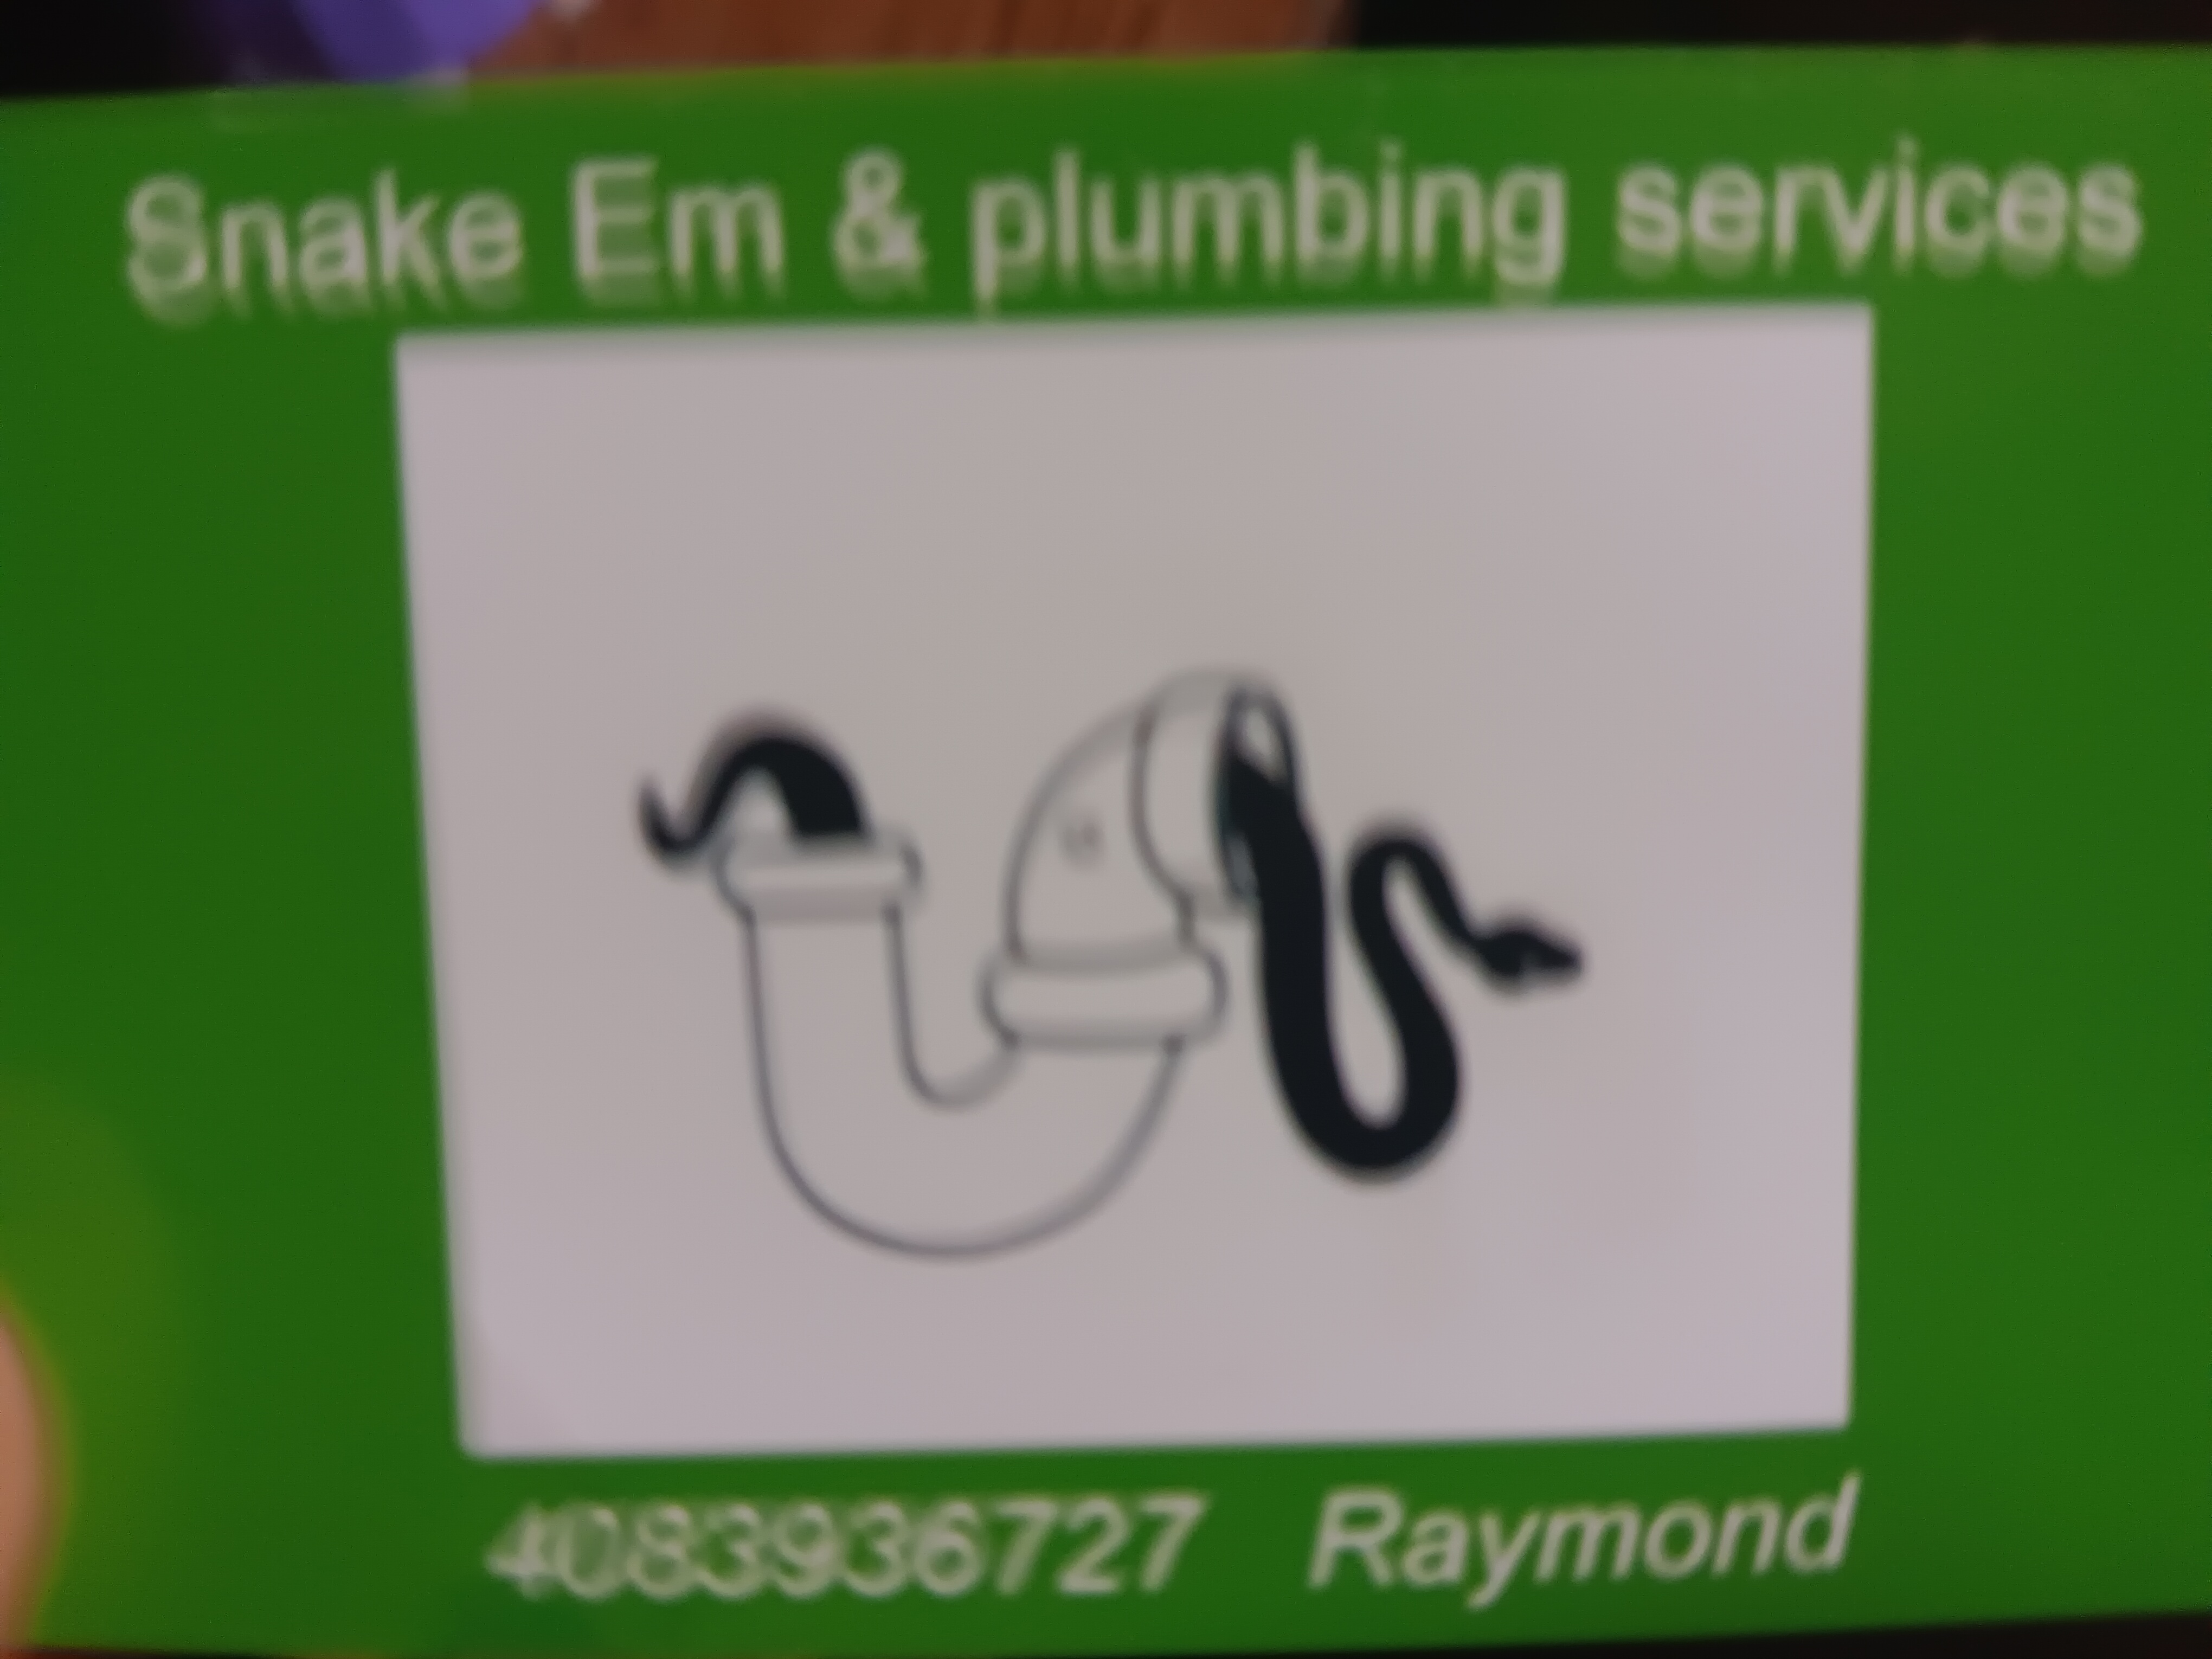 Snake Em & Plumbing Services-Unlicensed Contractor Logo